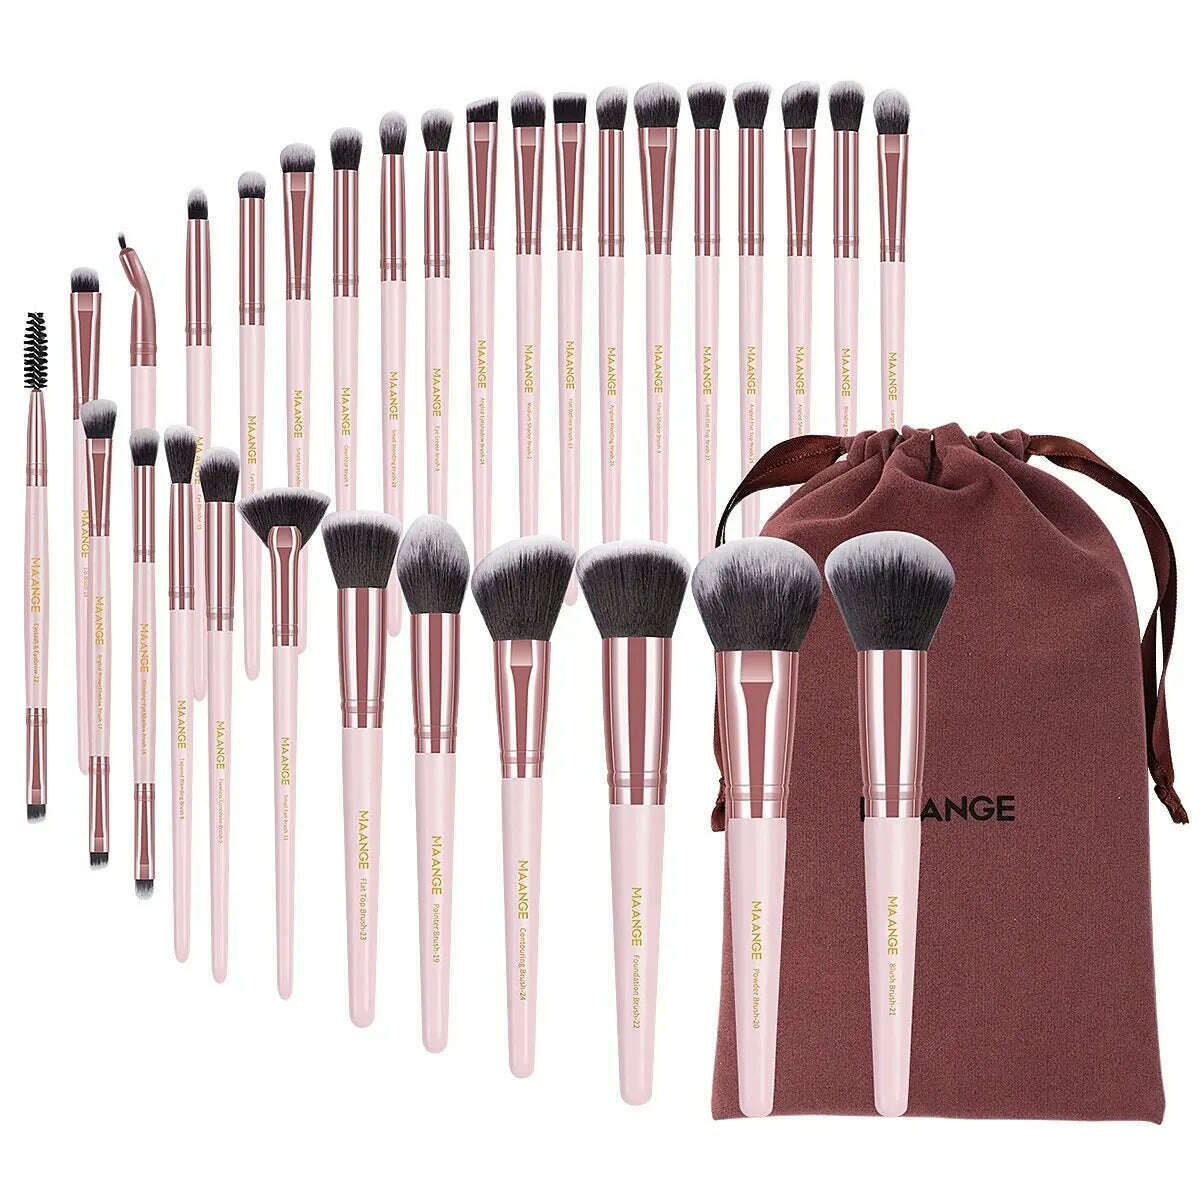 KIMLUD, MAANGE 30pcs Professional Makeup Brush Set Foundation Concealers Eye Shadows Powder Blush Blending Brushes Beauty Tools with Bag, KIMLUD Womens Clothes